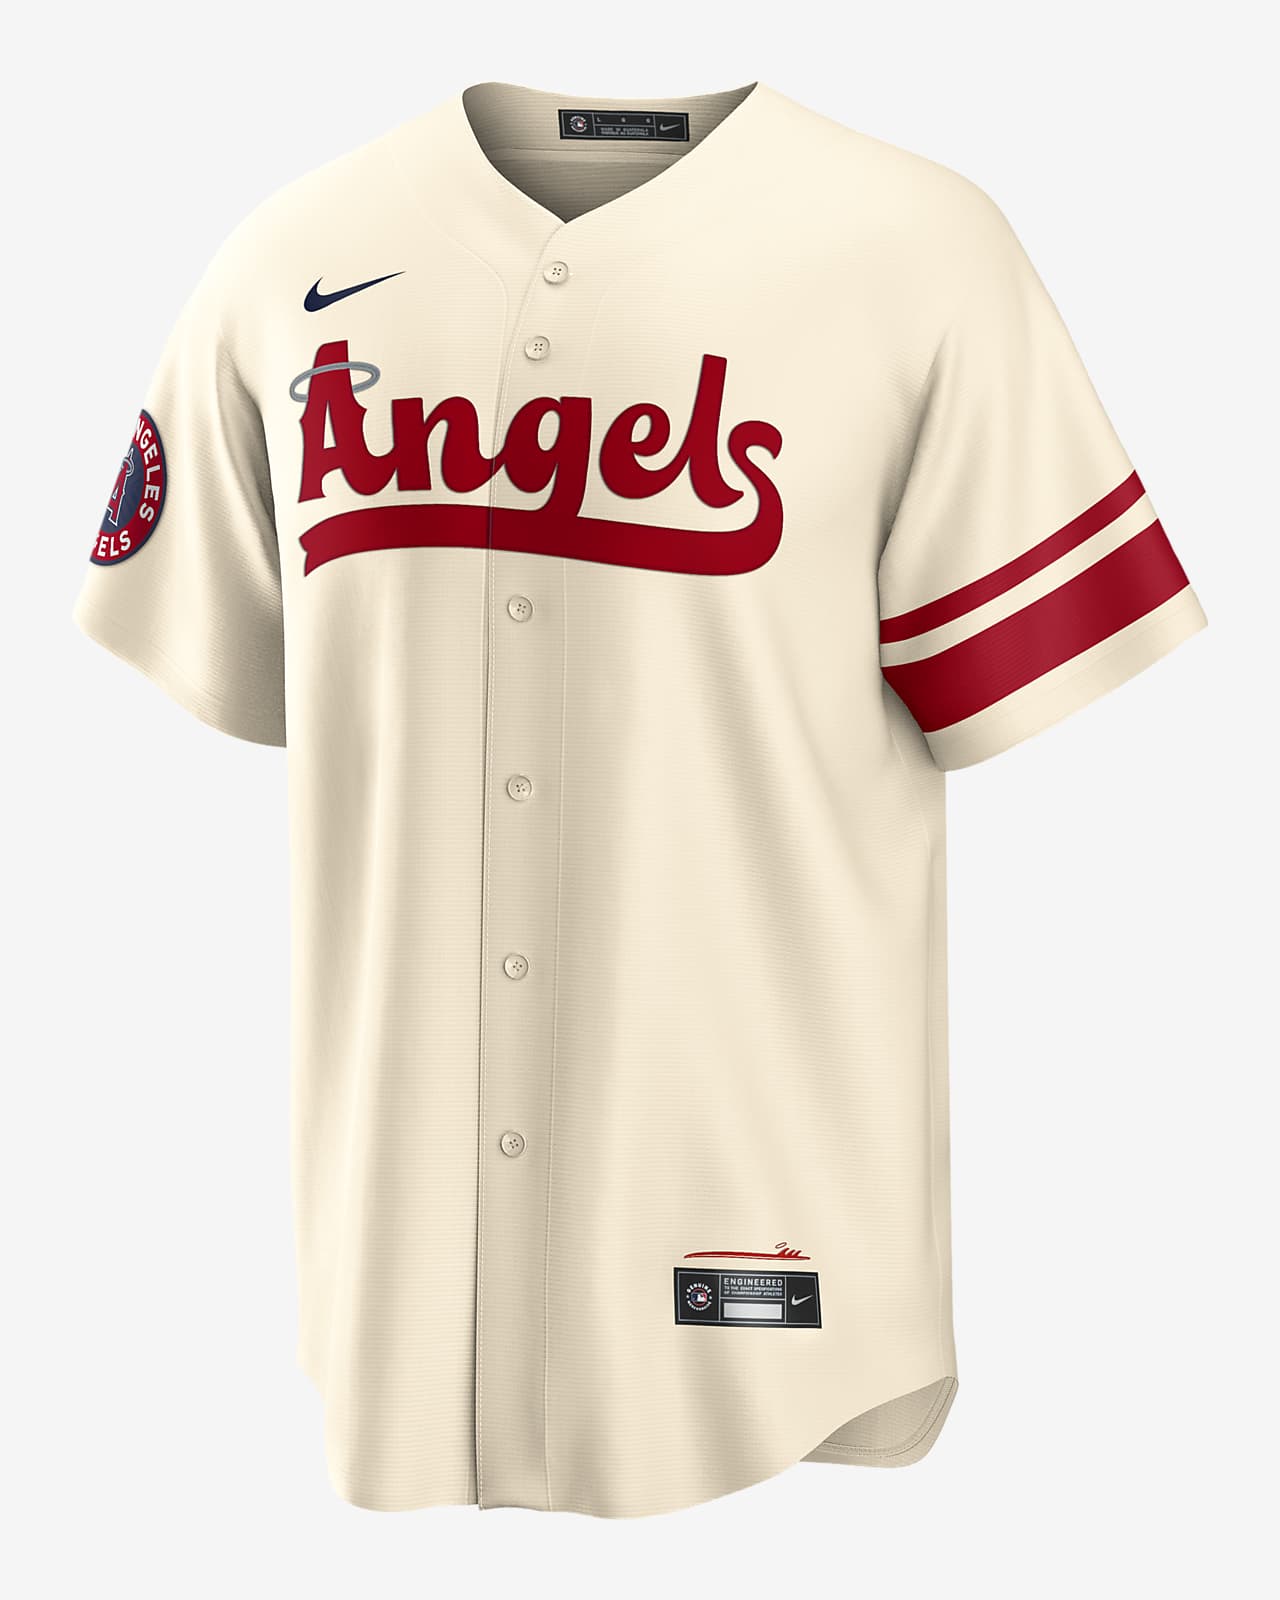 la angels baseball jersey